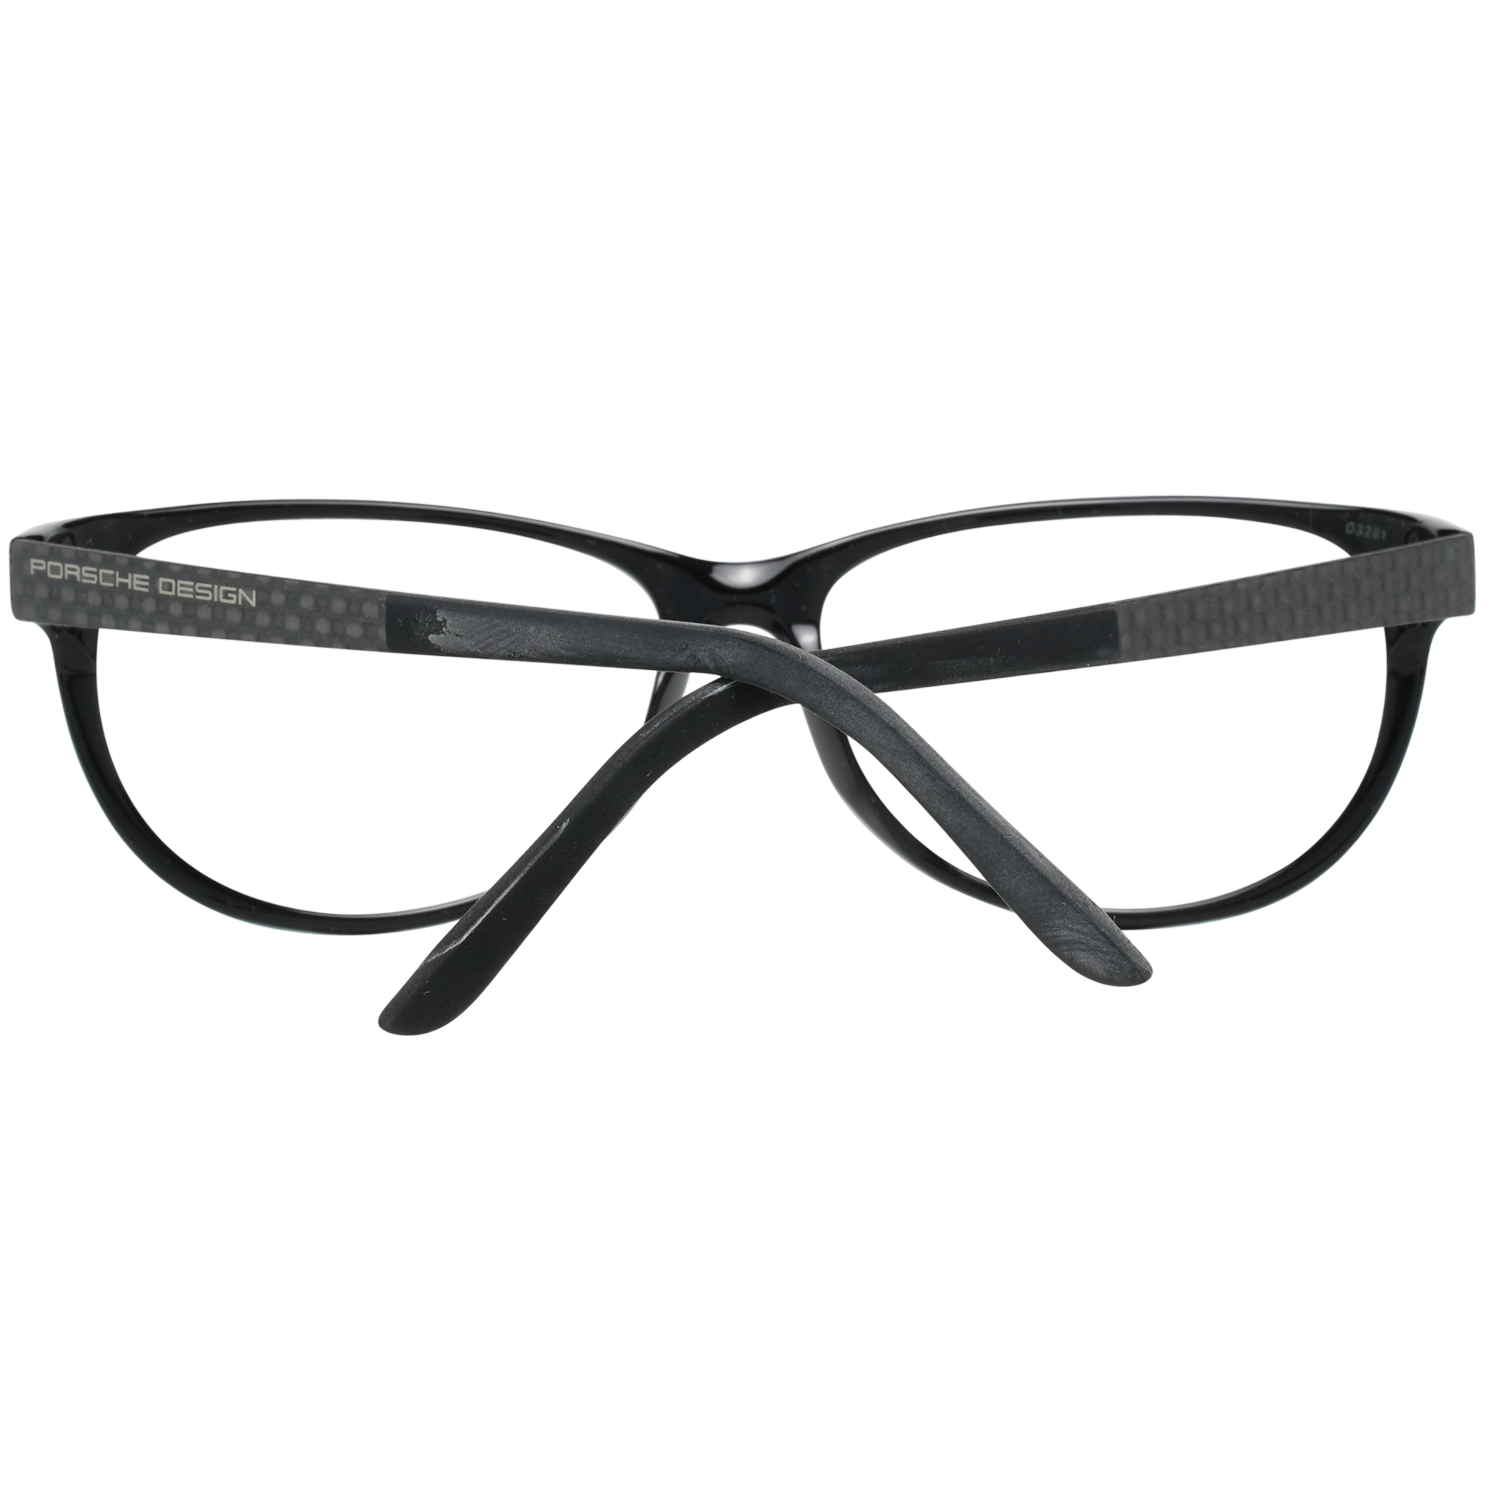 Porsche Design Eyeglasses Porsche Design Glasses Frames P8246 A 56 Eyeglasses Eyewear UK USA Australia 